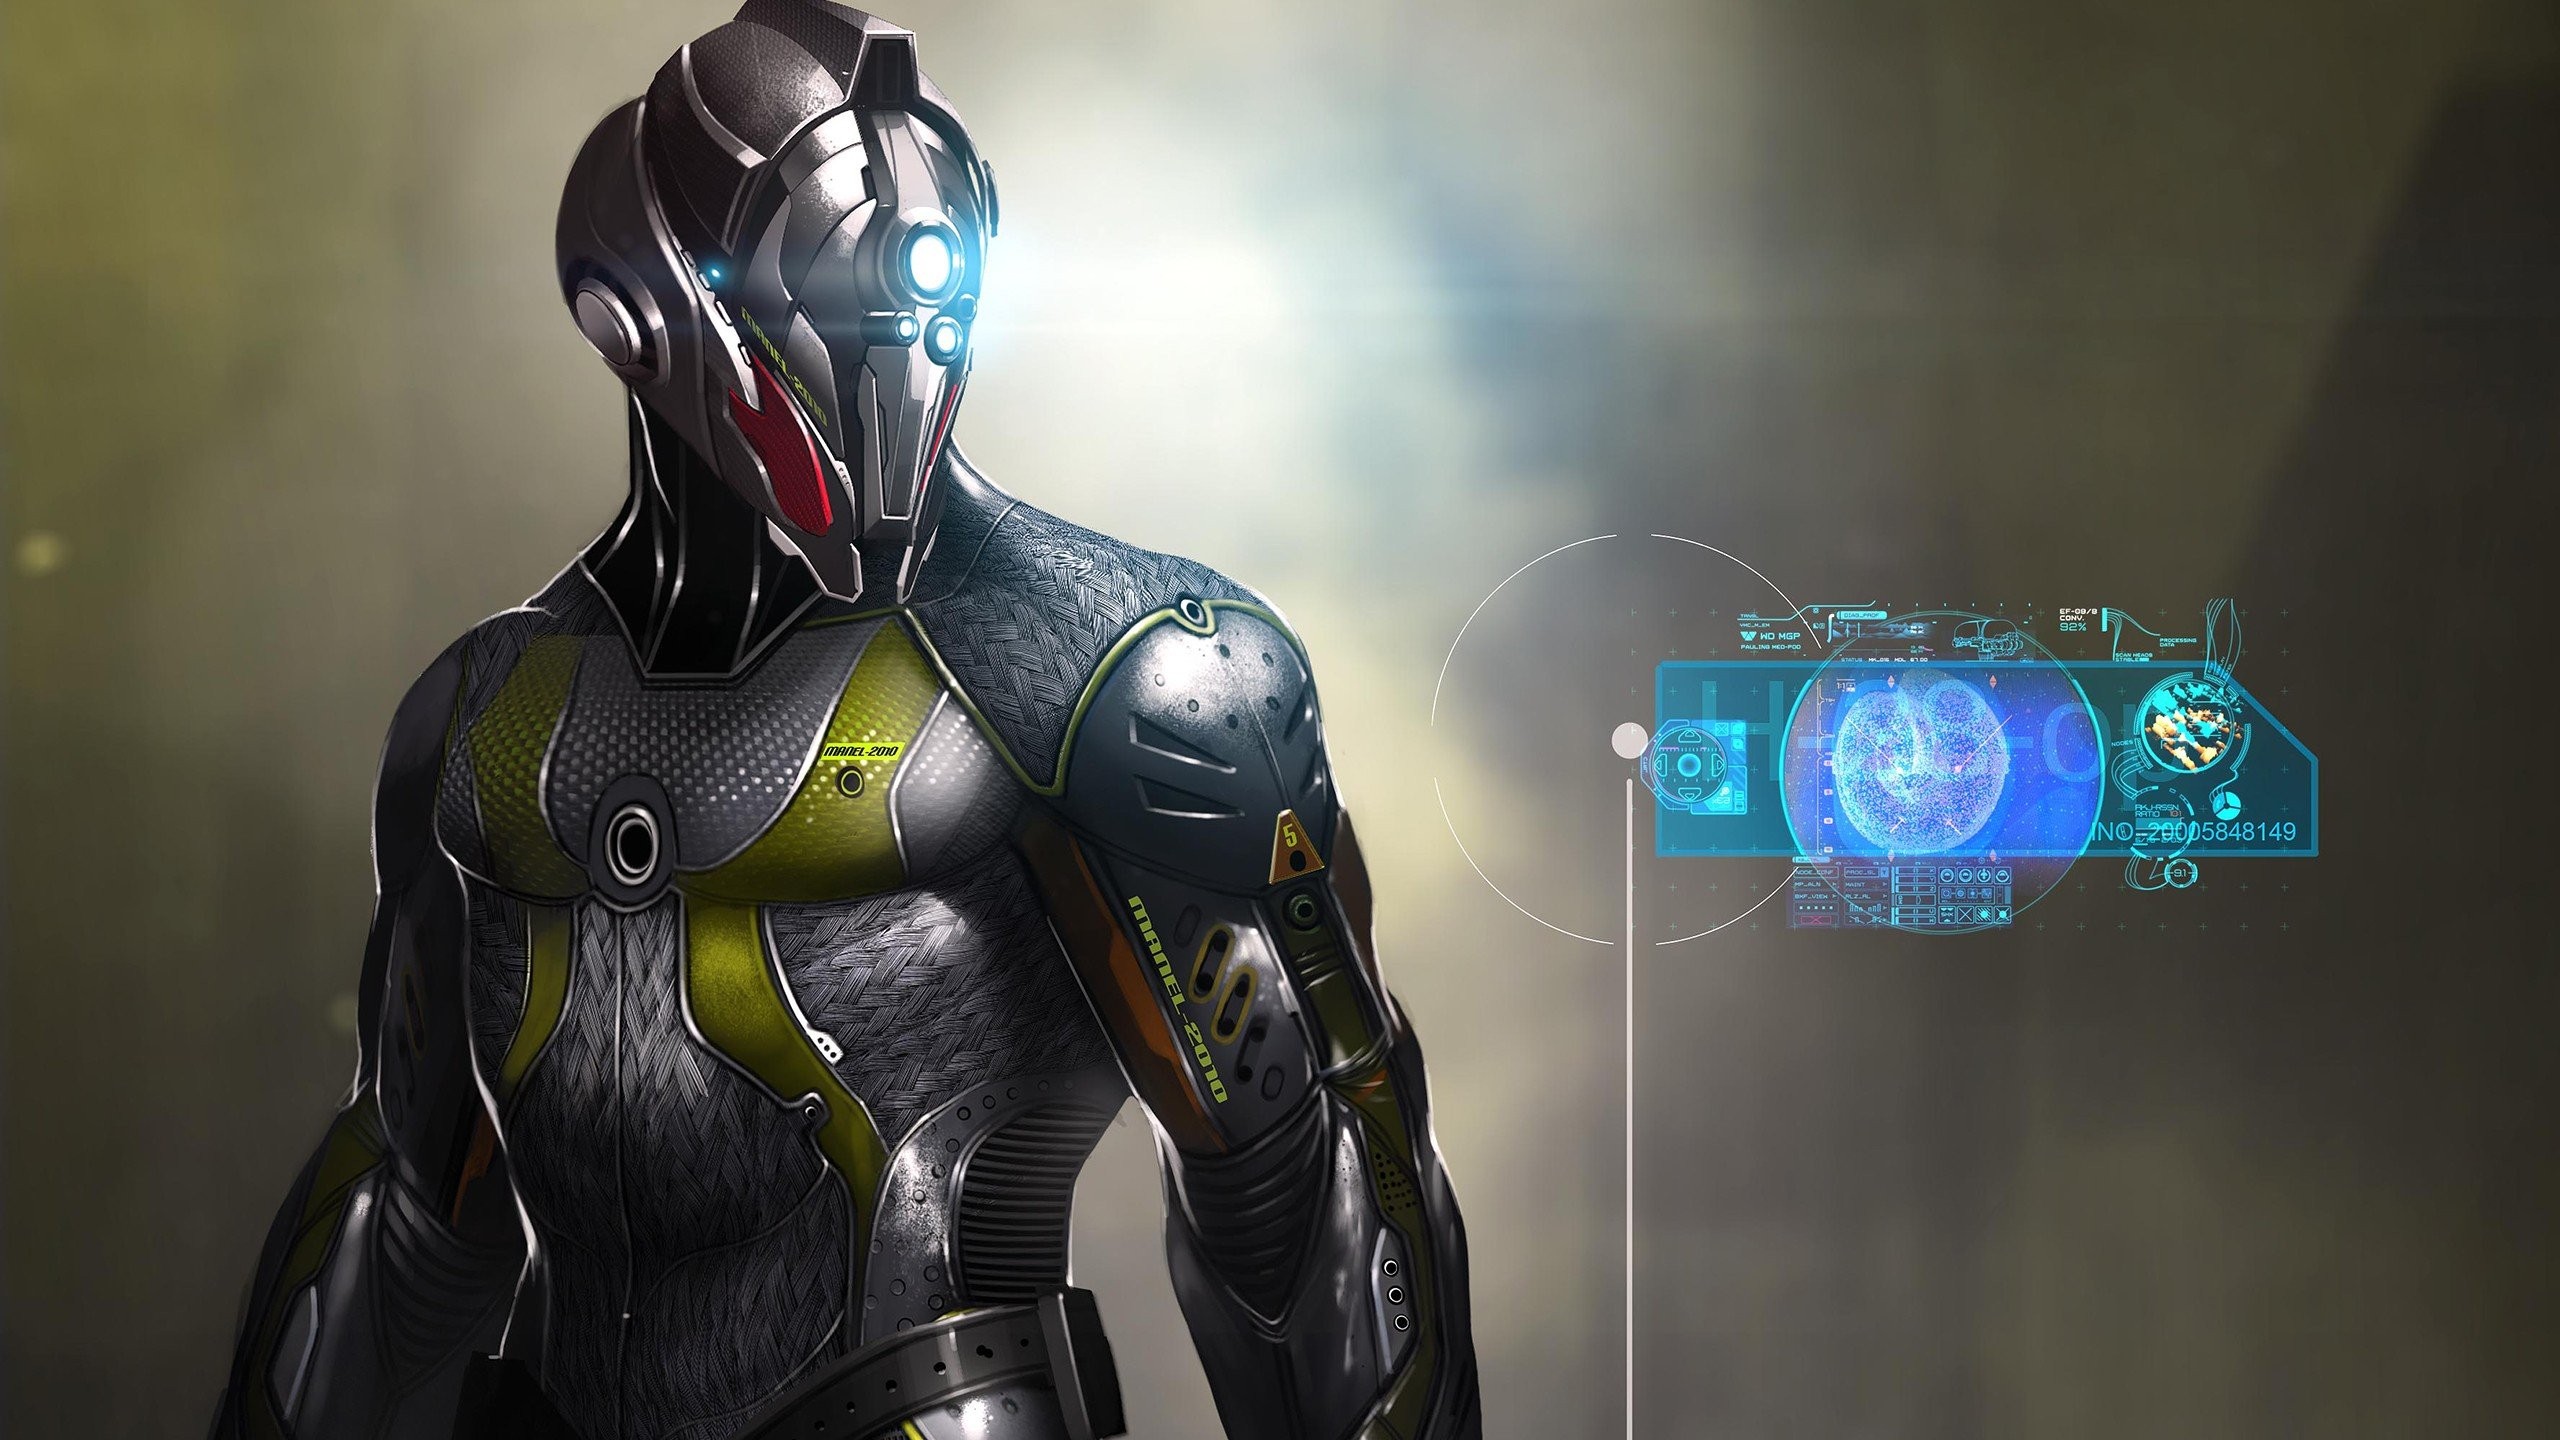 General 2560x1440 cyborg futuristic digital art machine science fiction artwork